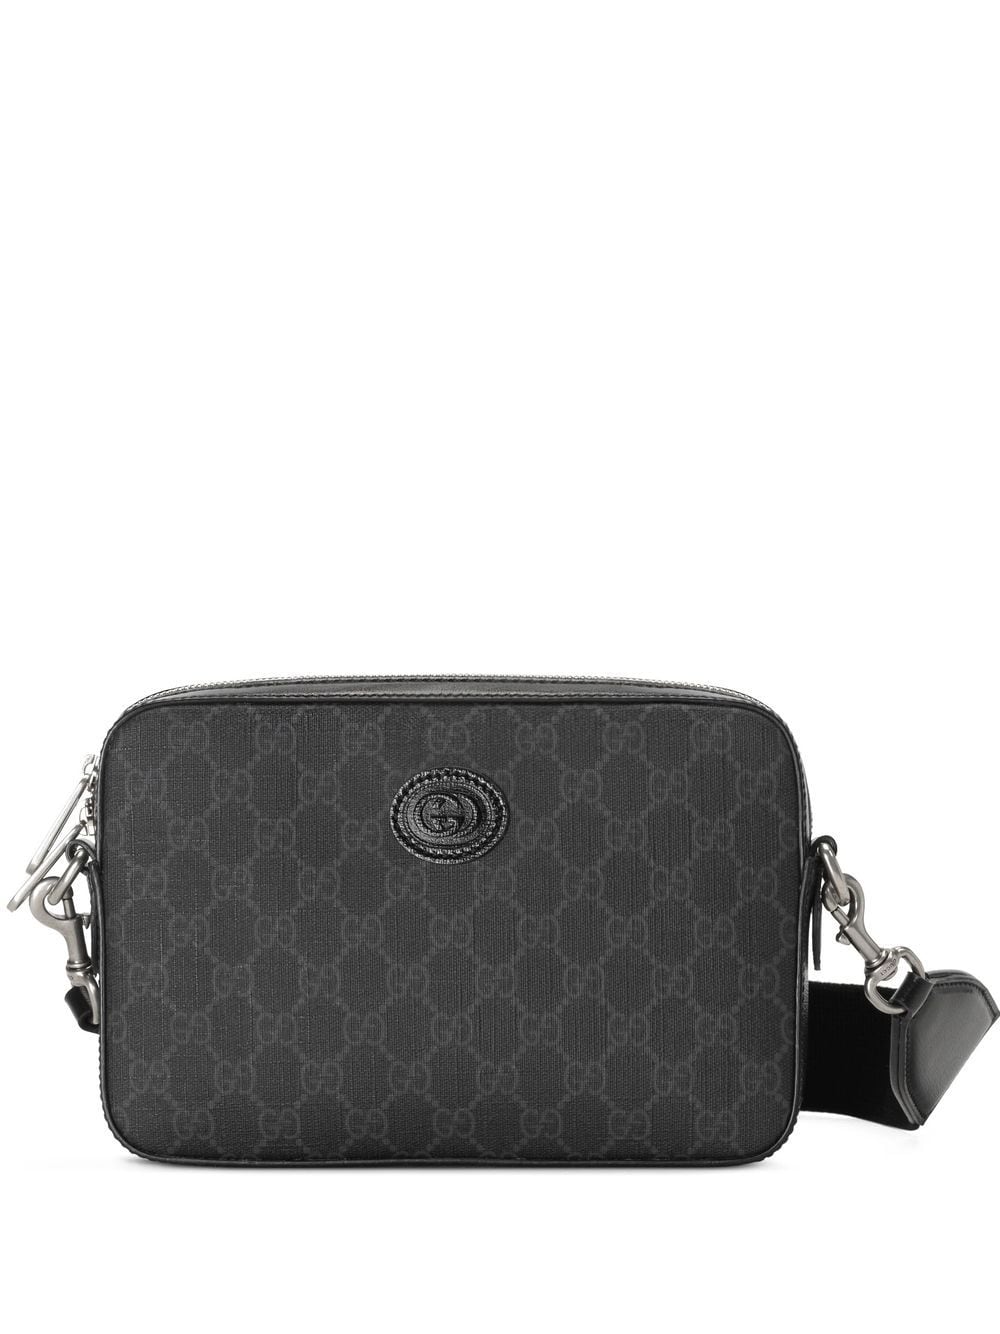 Gucci GG Supreme Shoulder Bag - Farfetch